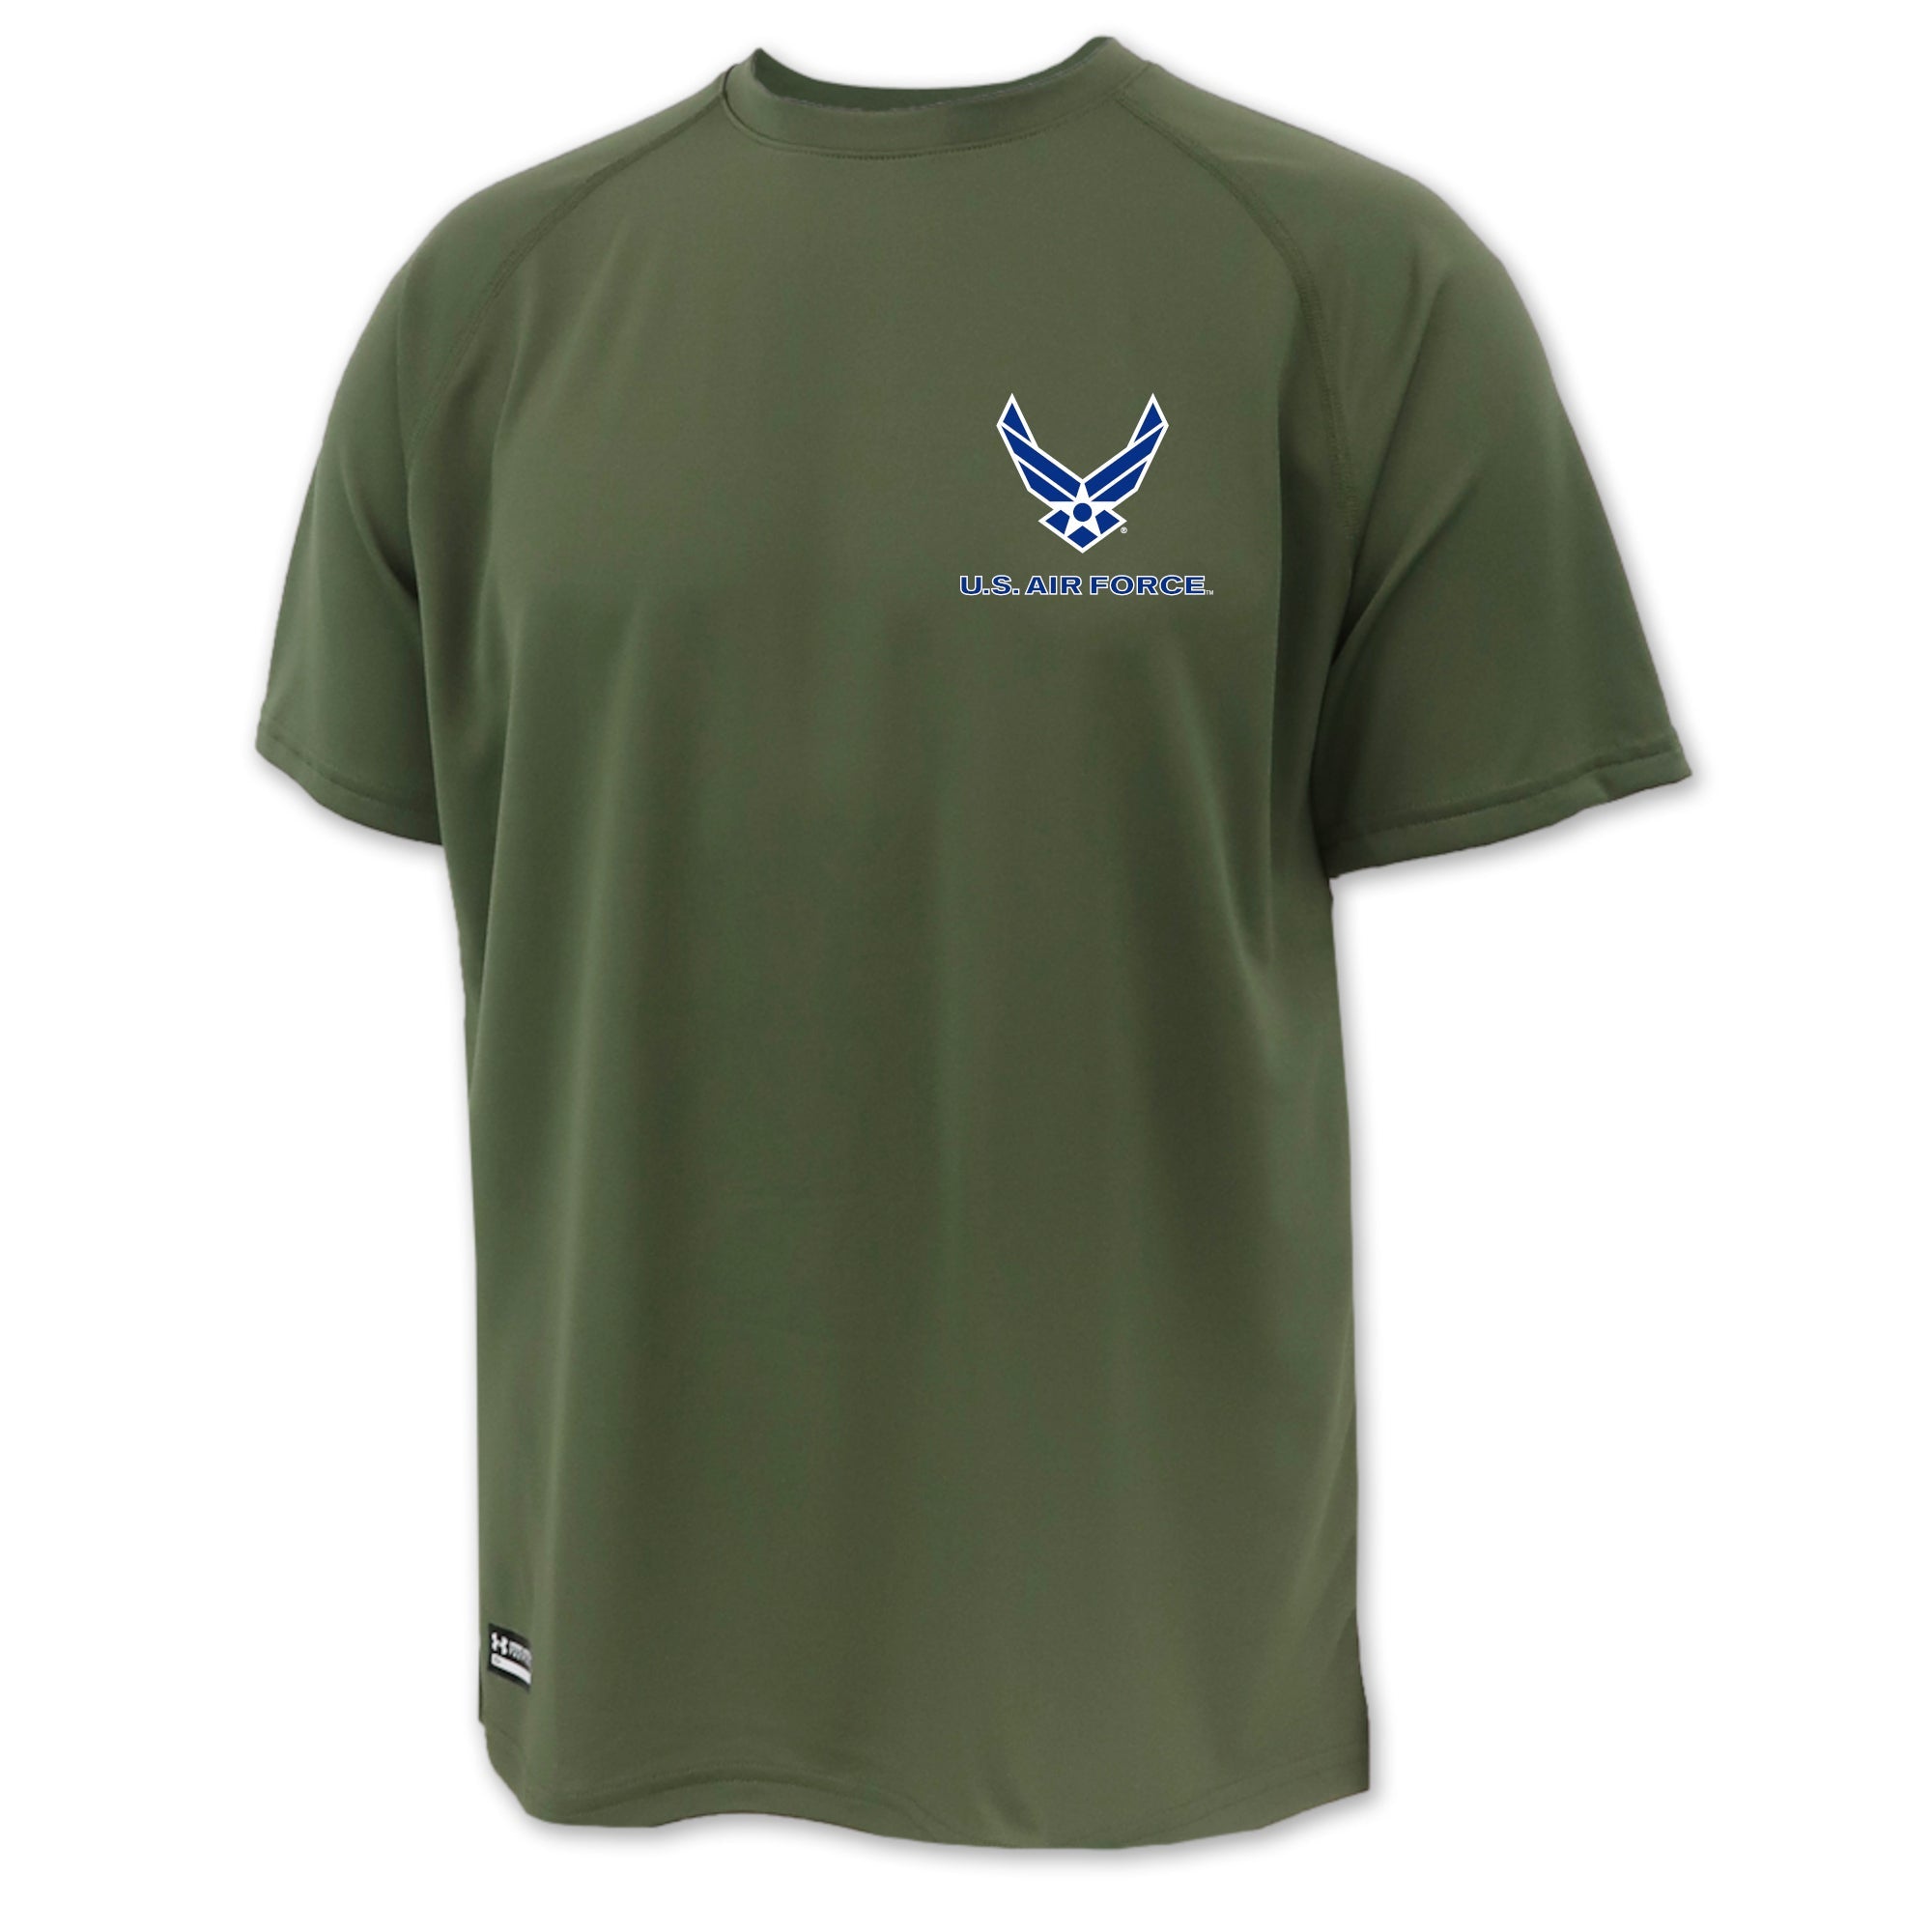 Under Armour Tactical Short-Sleeve T-Shirt for Men